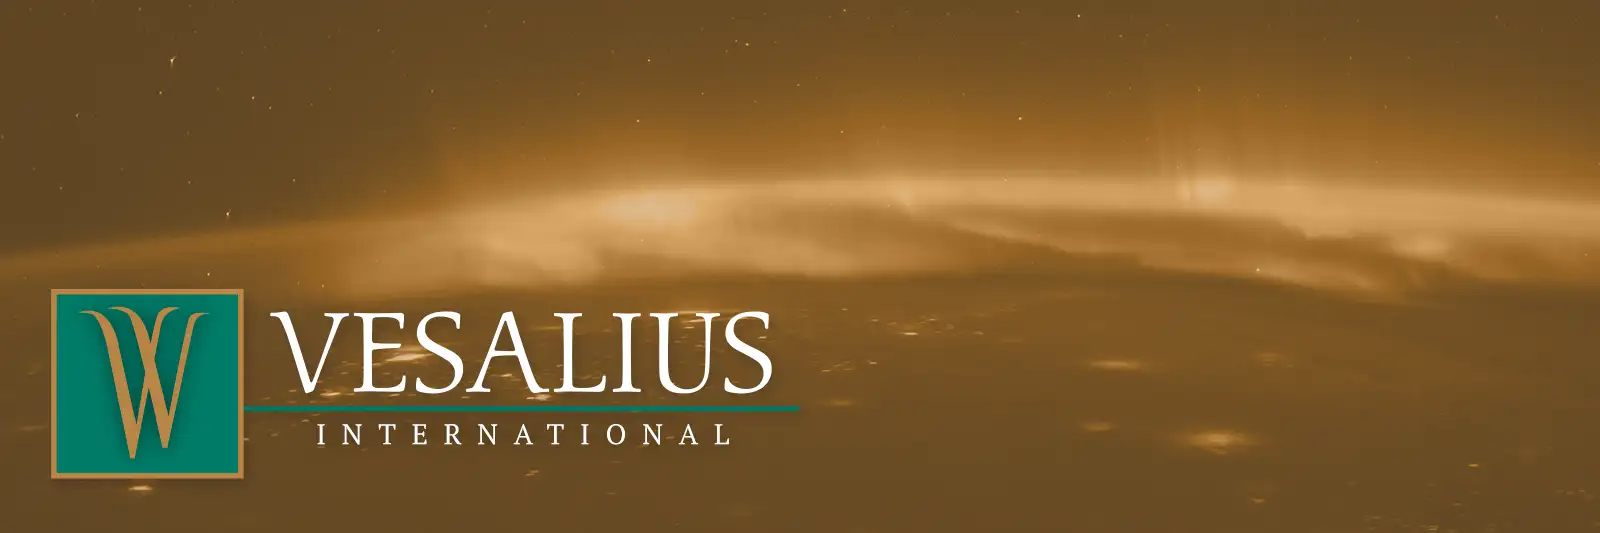 Vesalius International logo